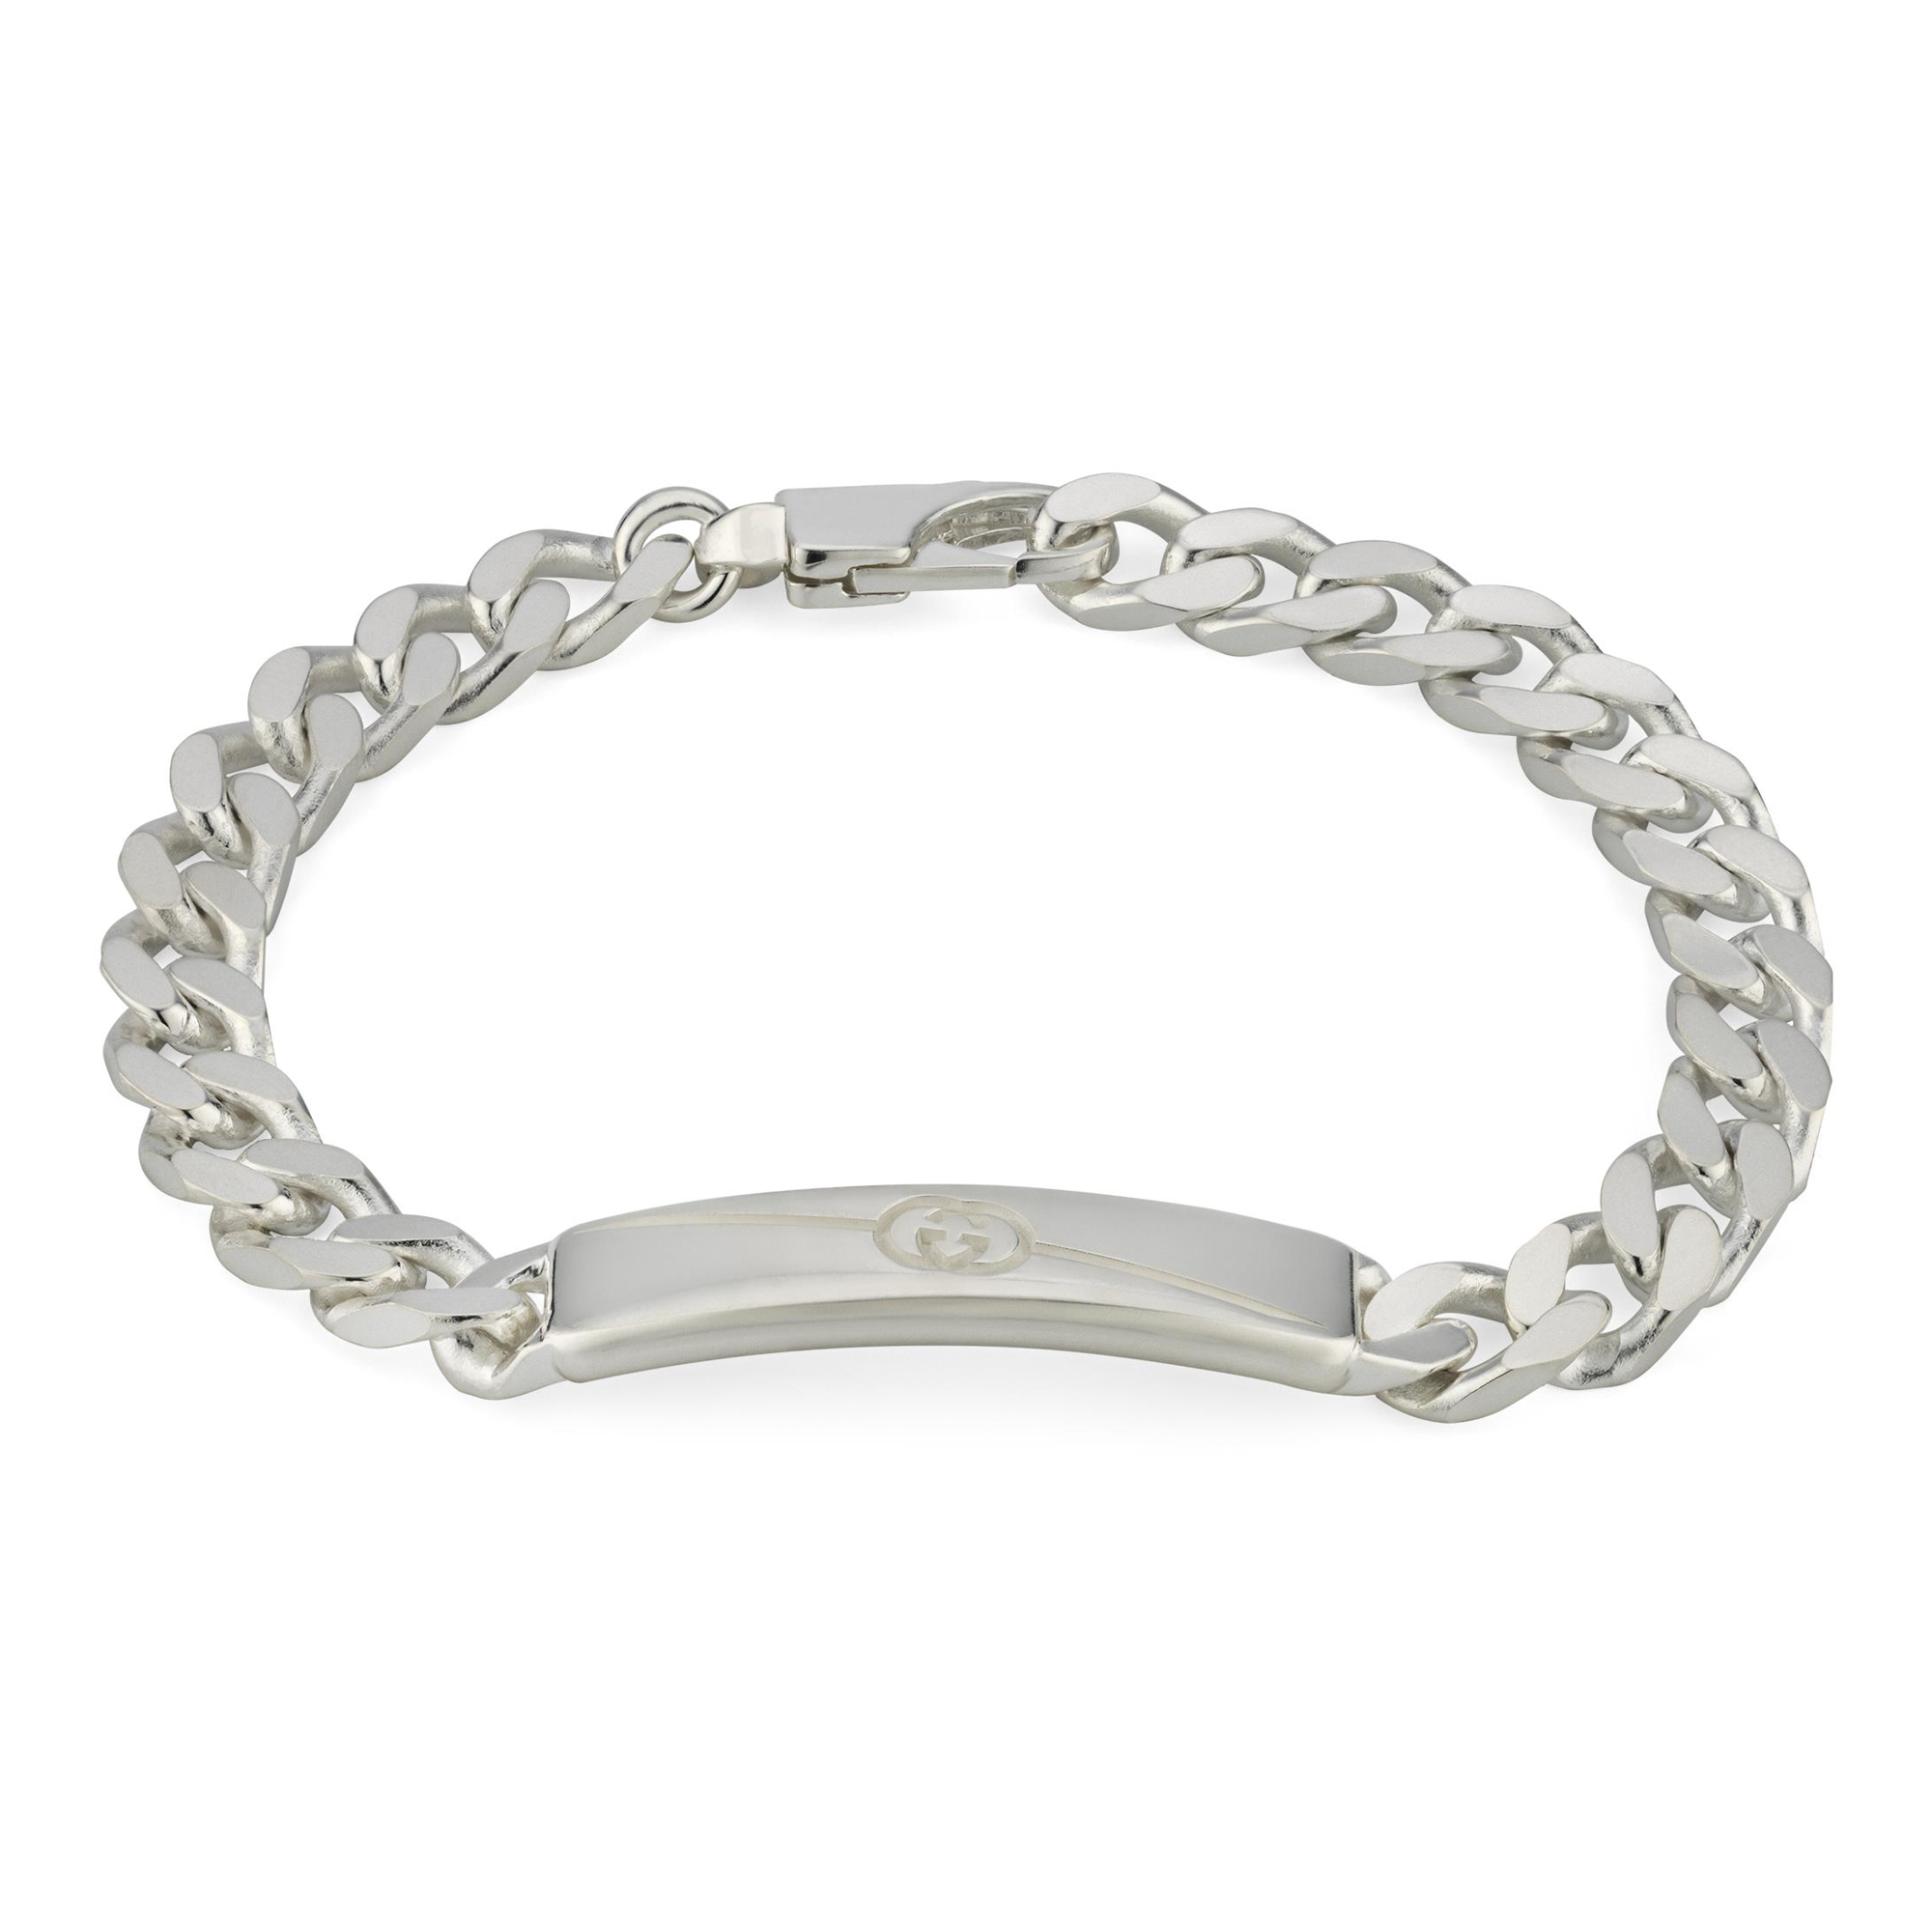 Gucci Diagonal Interlocking G Sterling Silver Bracelet - 8 Inches